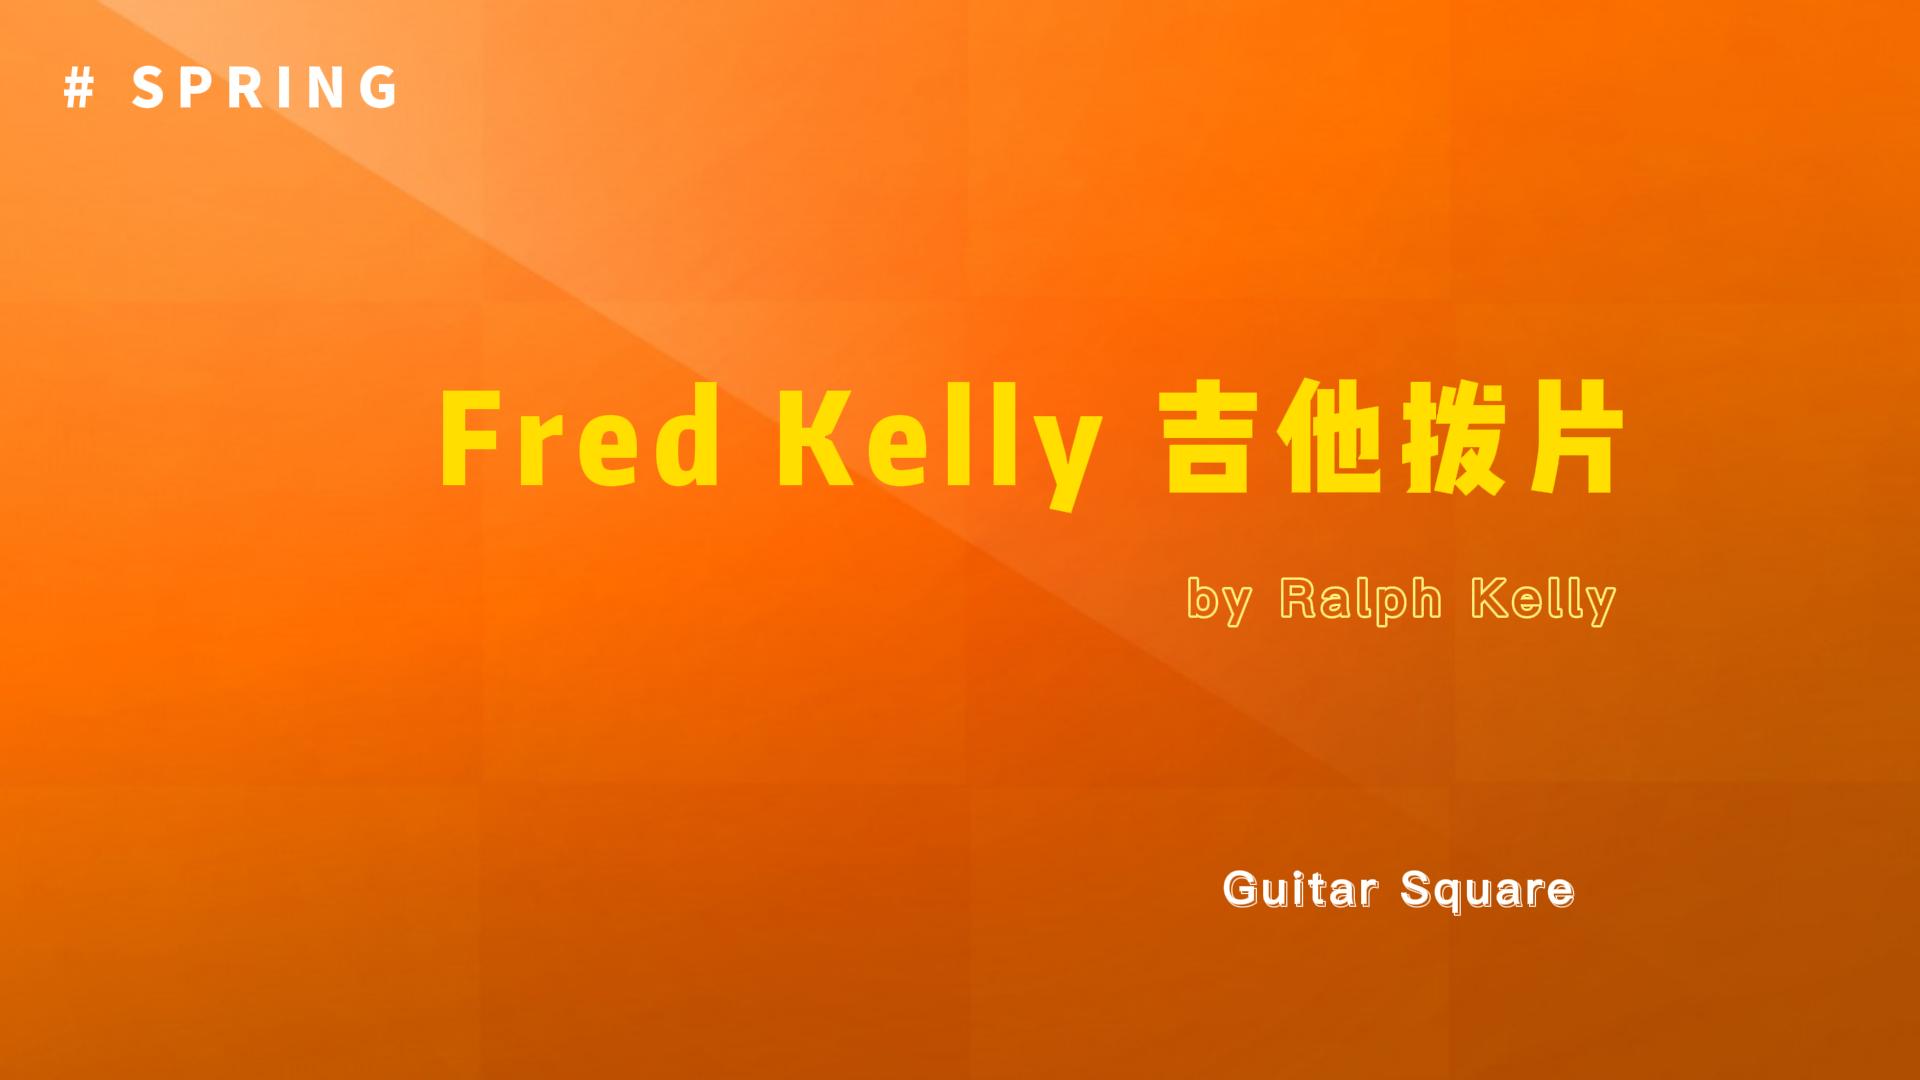 Fred Kelly 拨片创始人之子Ralph Kelly 指套拨片 流畅弹奏展现高超指弹技术